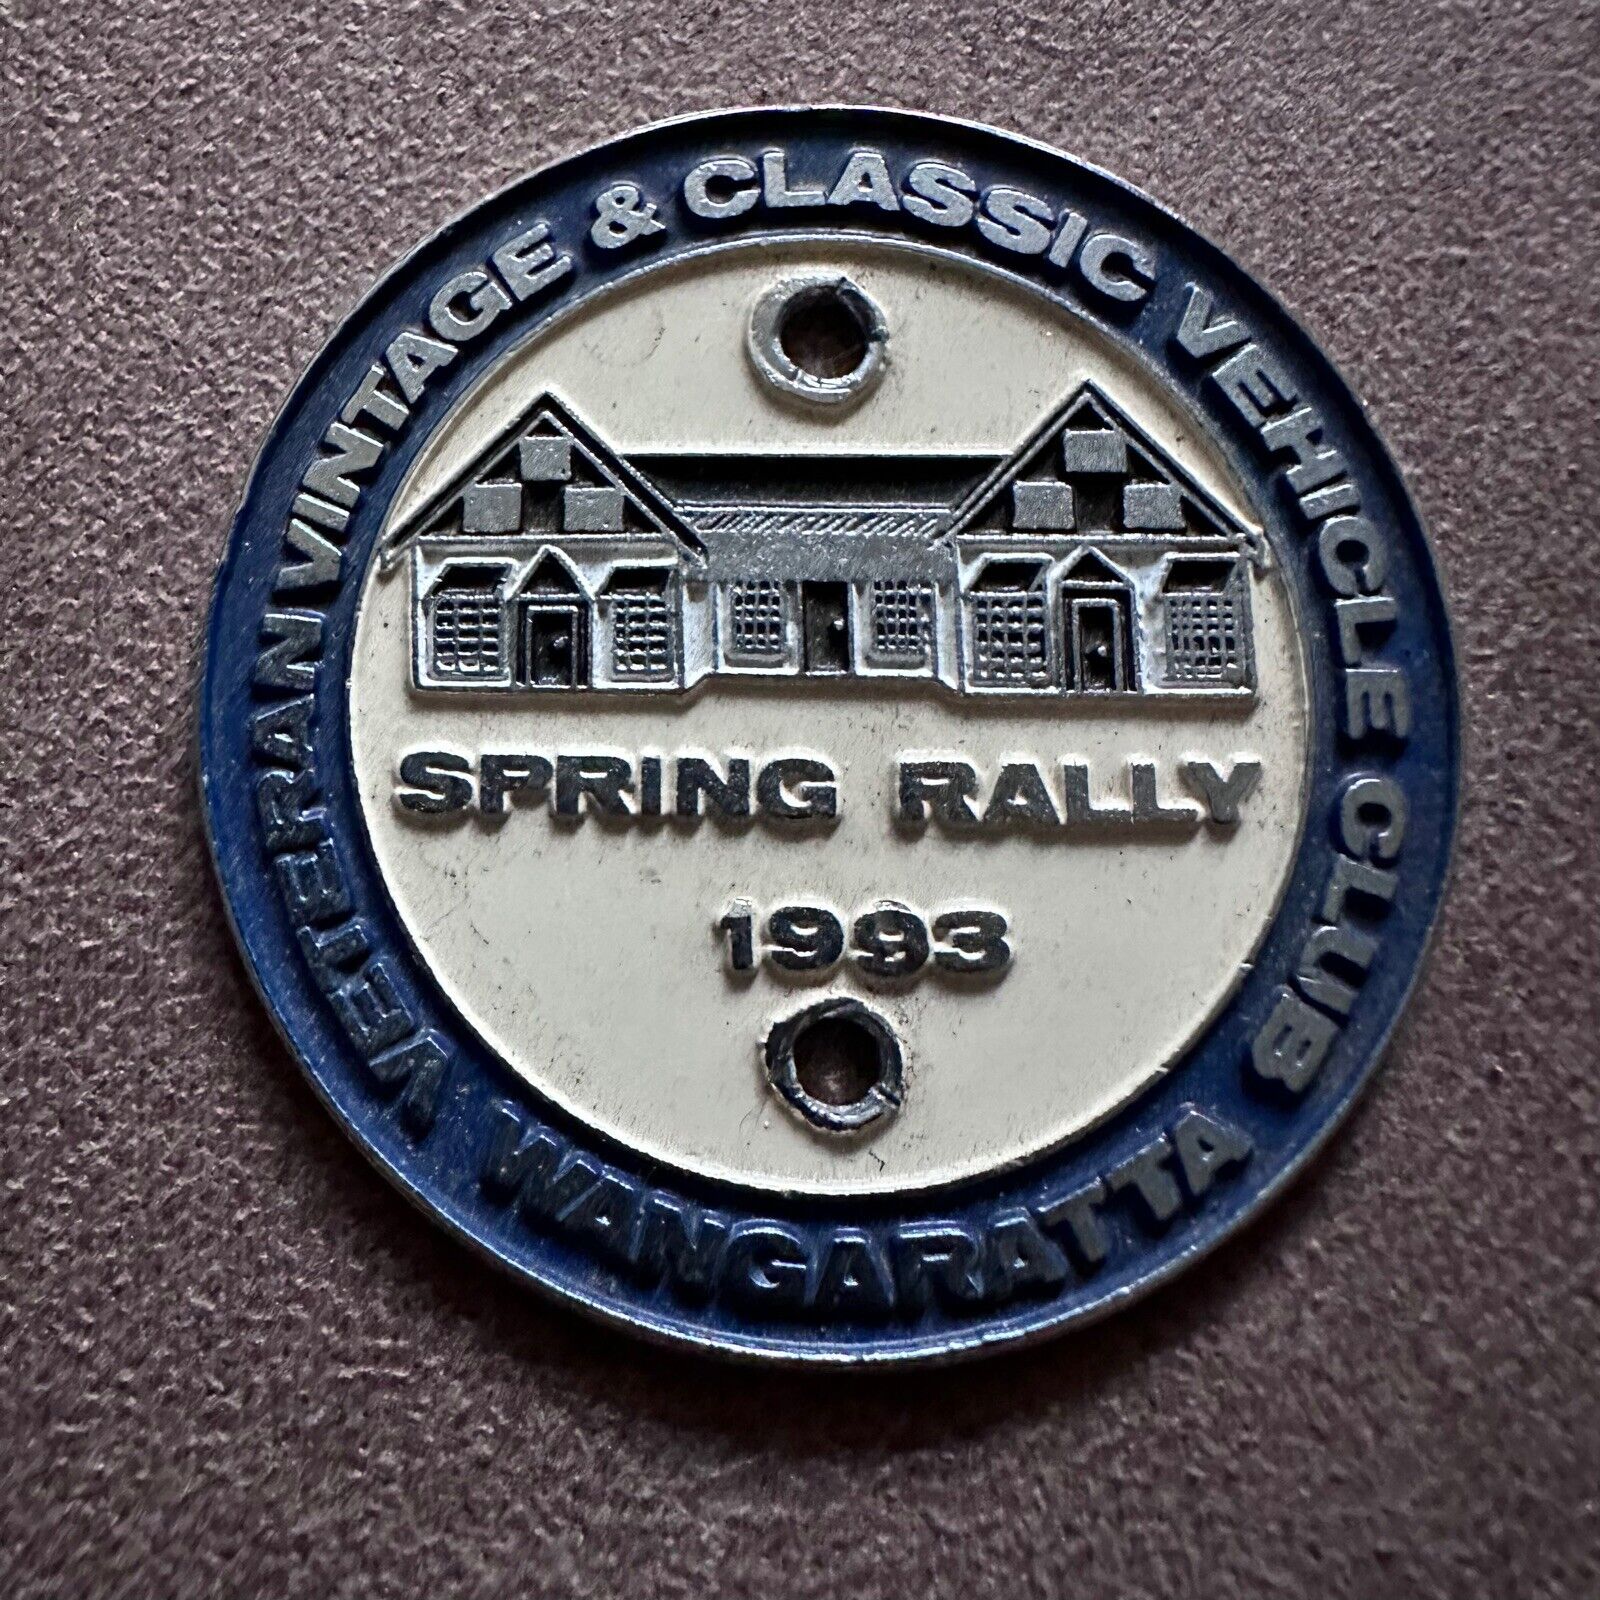 1993 SPRING RALLY VETERAN VINTAGE & CLASSIC CAR CLUB WANGARATTA CAR GRILLE BADGE